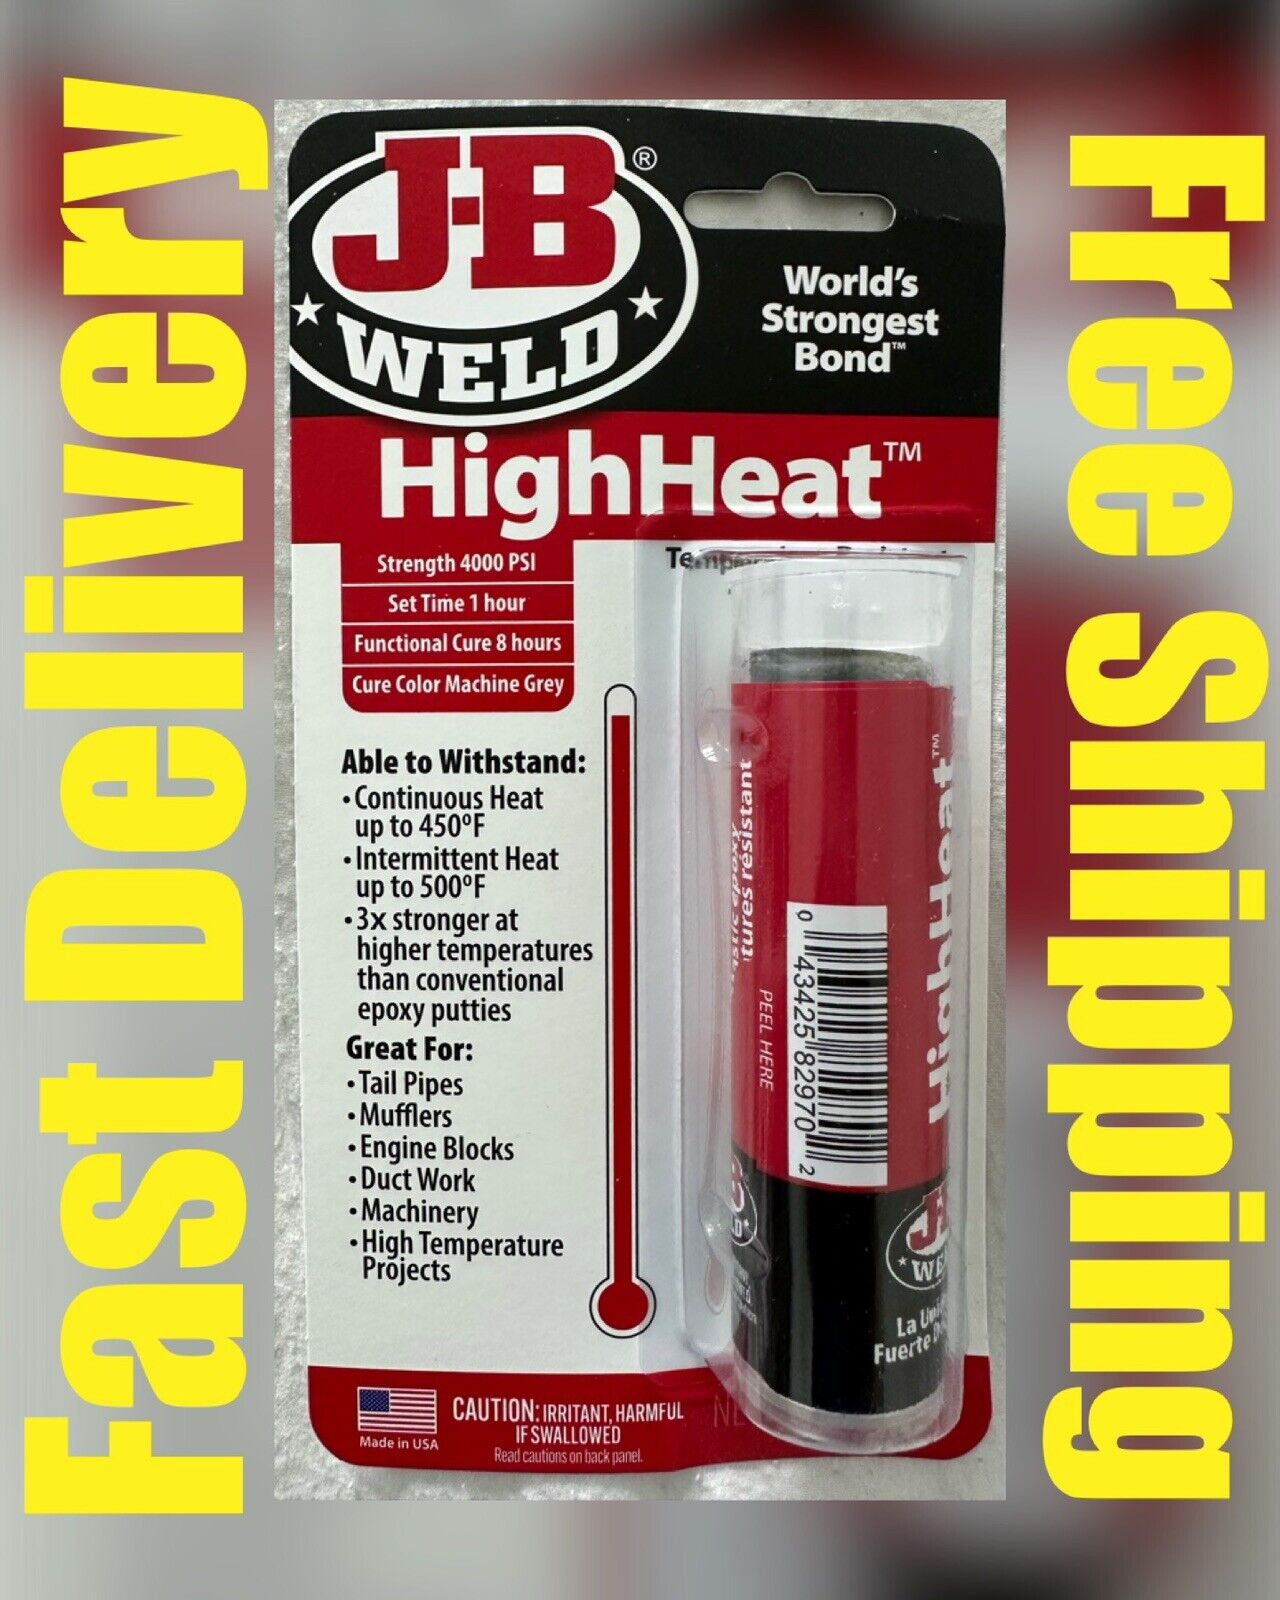 JB Weld highHeat 8297 Temperature Resistant Epoxy Putty